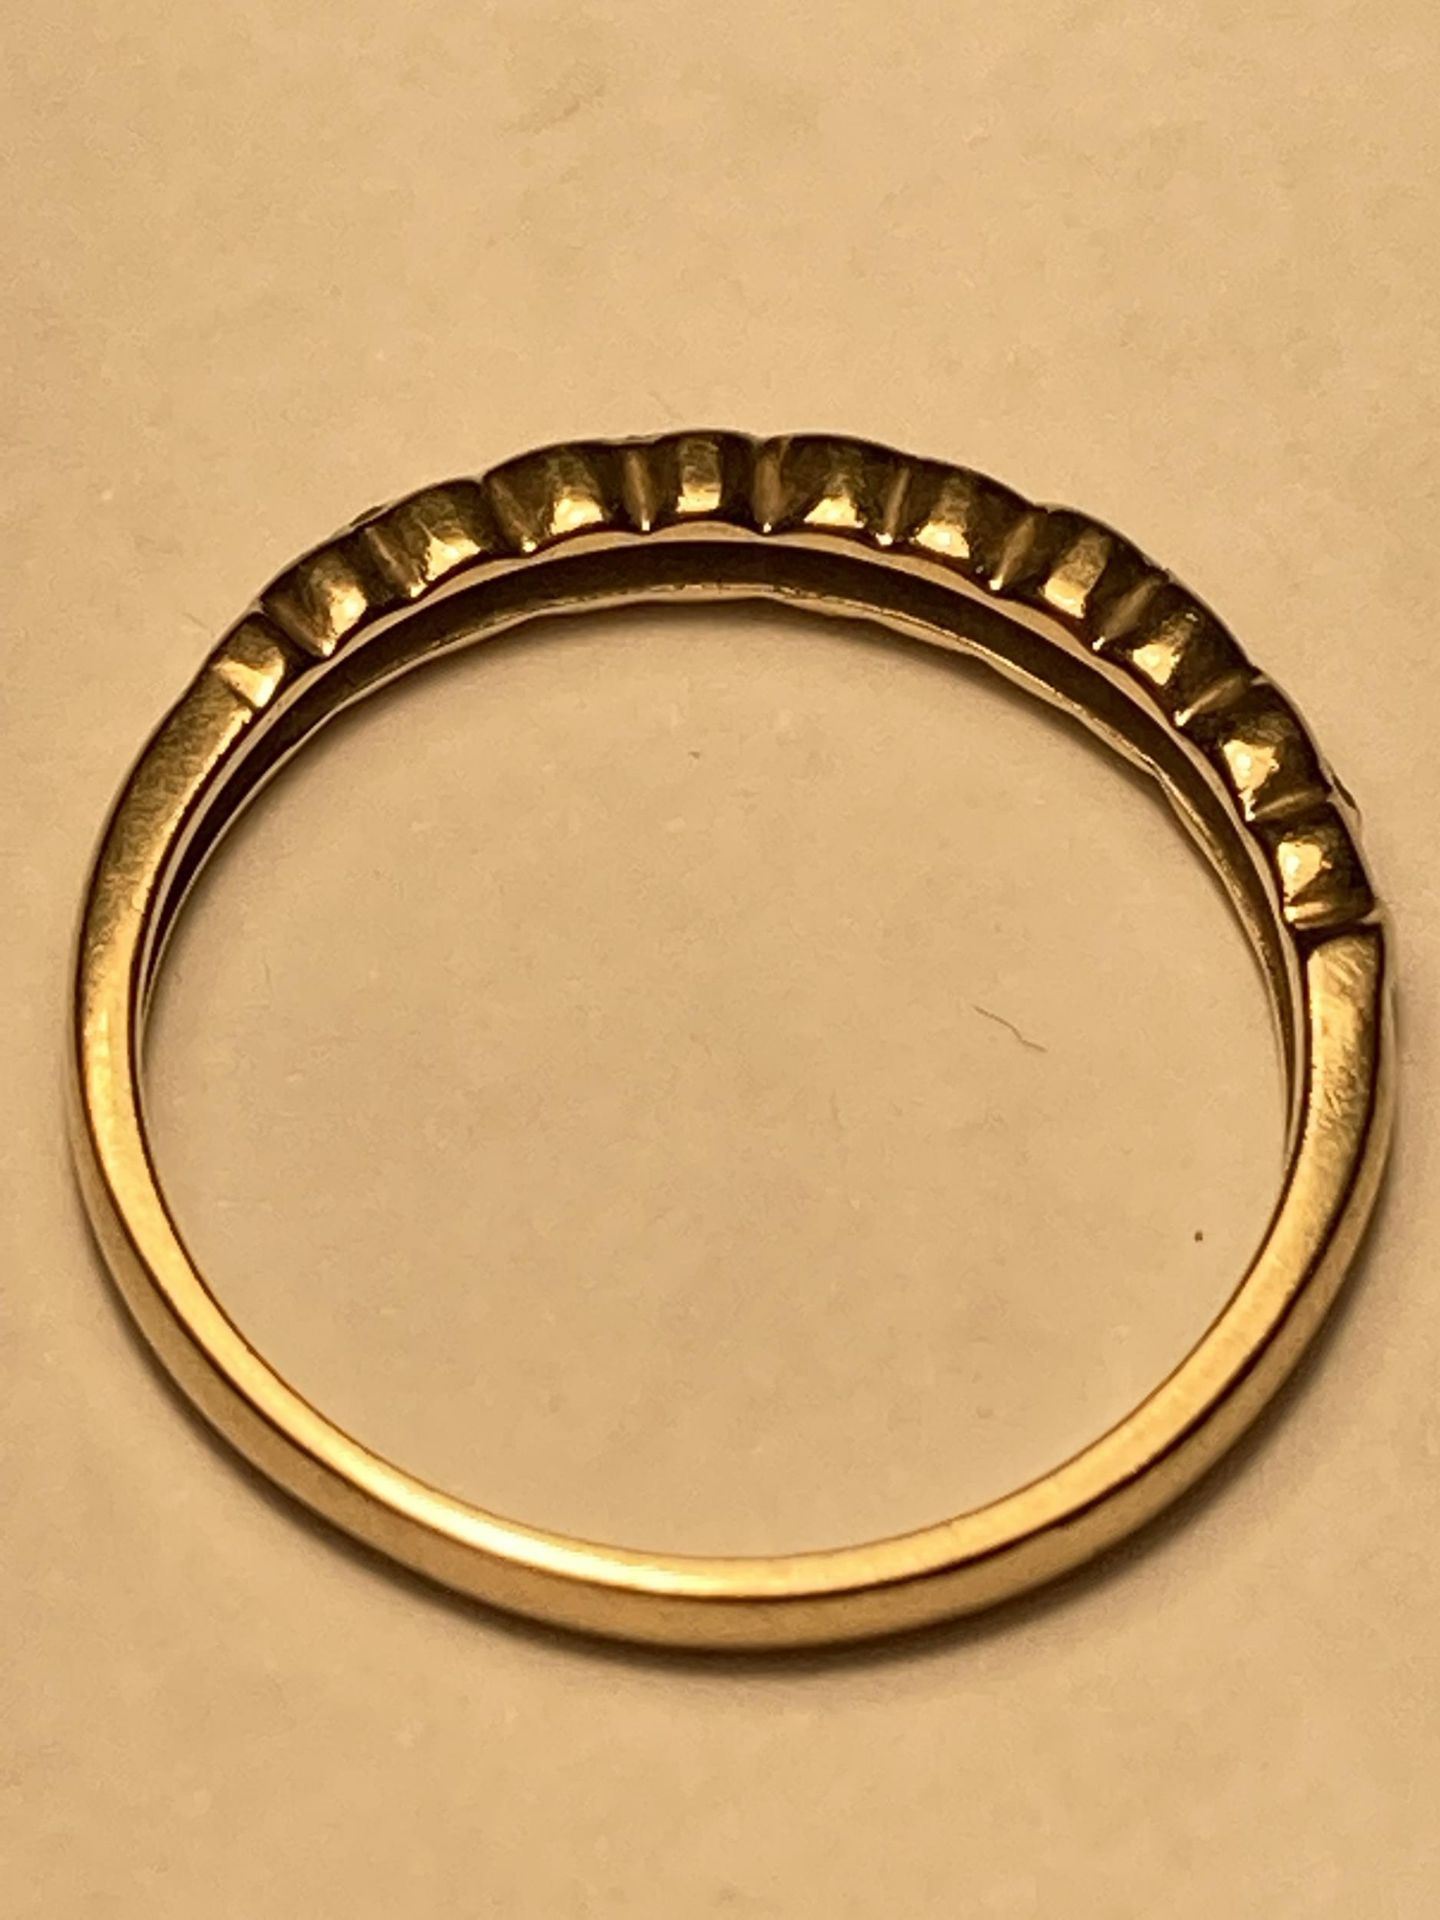 A 9 CARAT GOLD RING WITH FIVE DIAMONDS ON A TWIST DESIGN SIZE M/N - Bild 3 aus 3